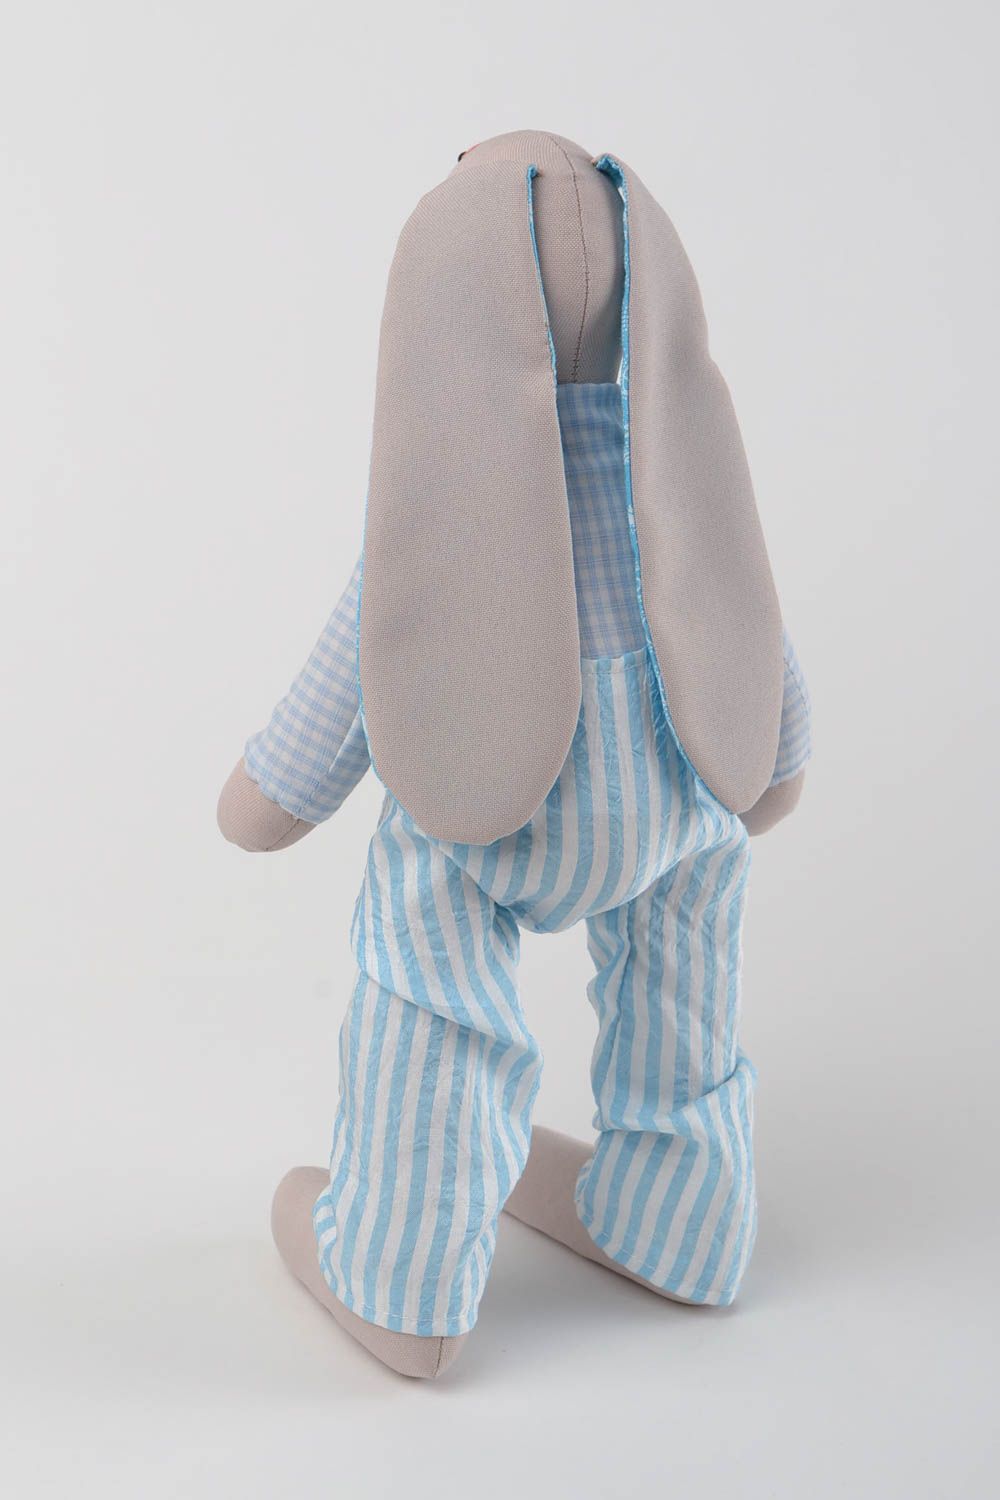 Beautiful handmade fabric soft toy decorative stuffed toy nursery designs photo 5